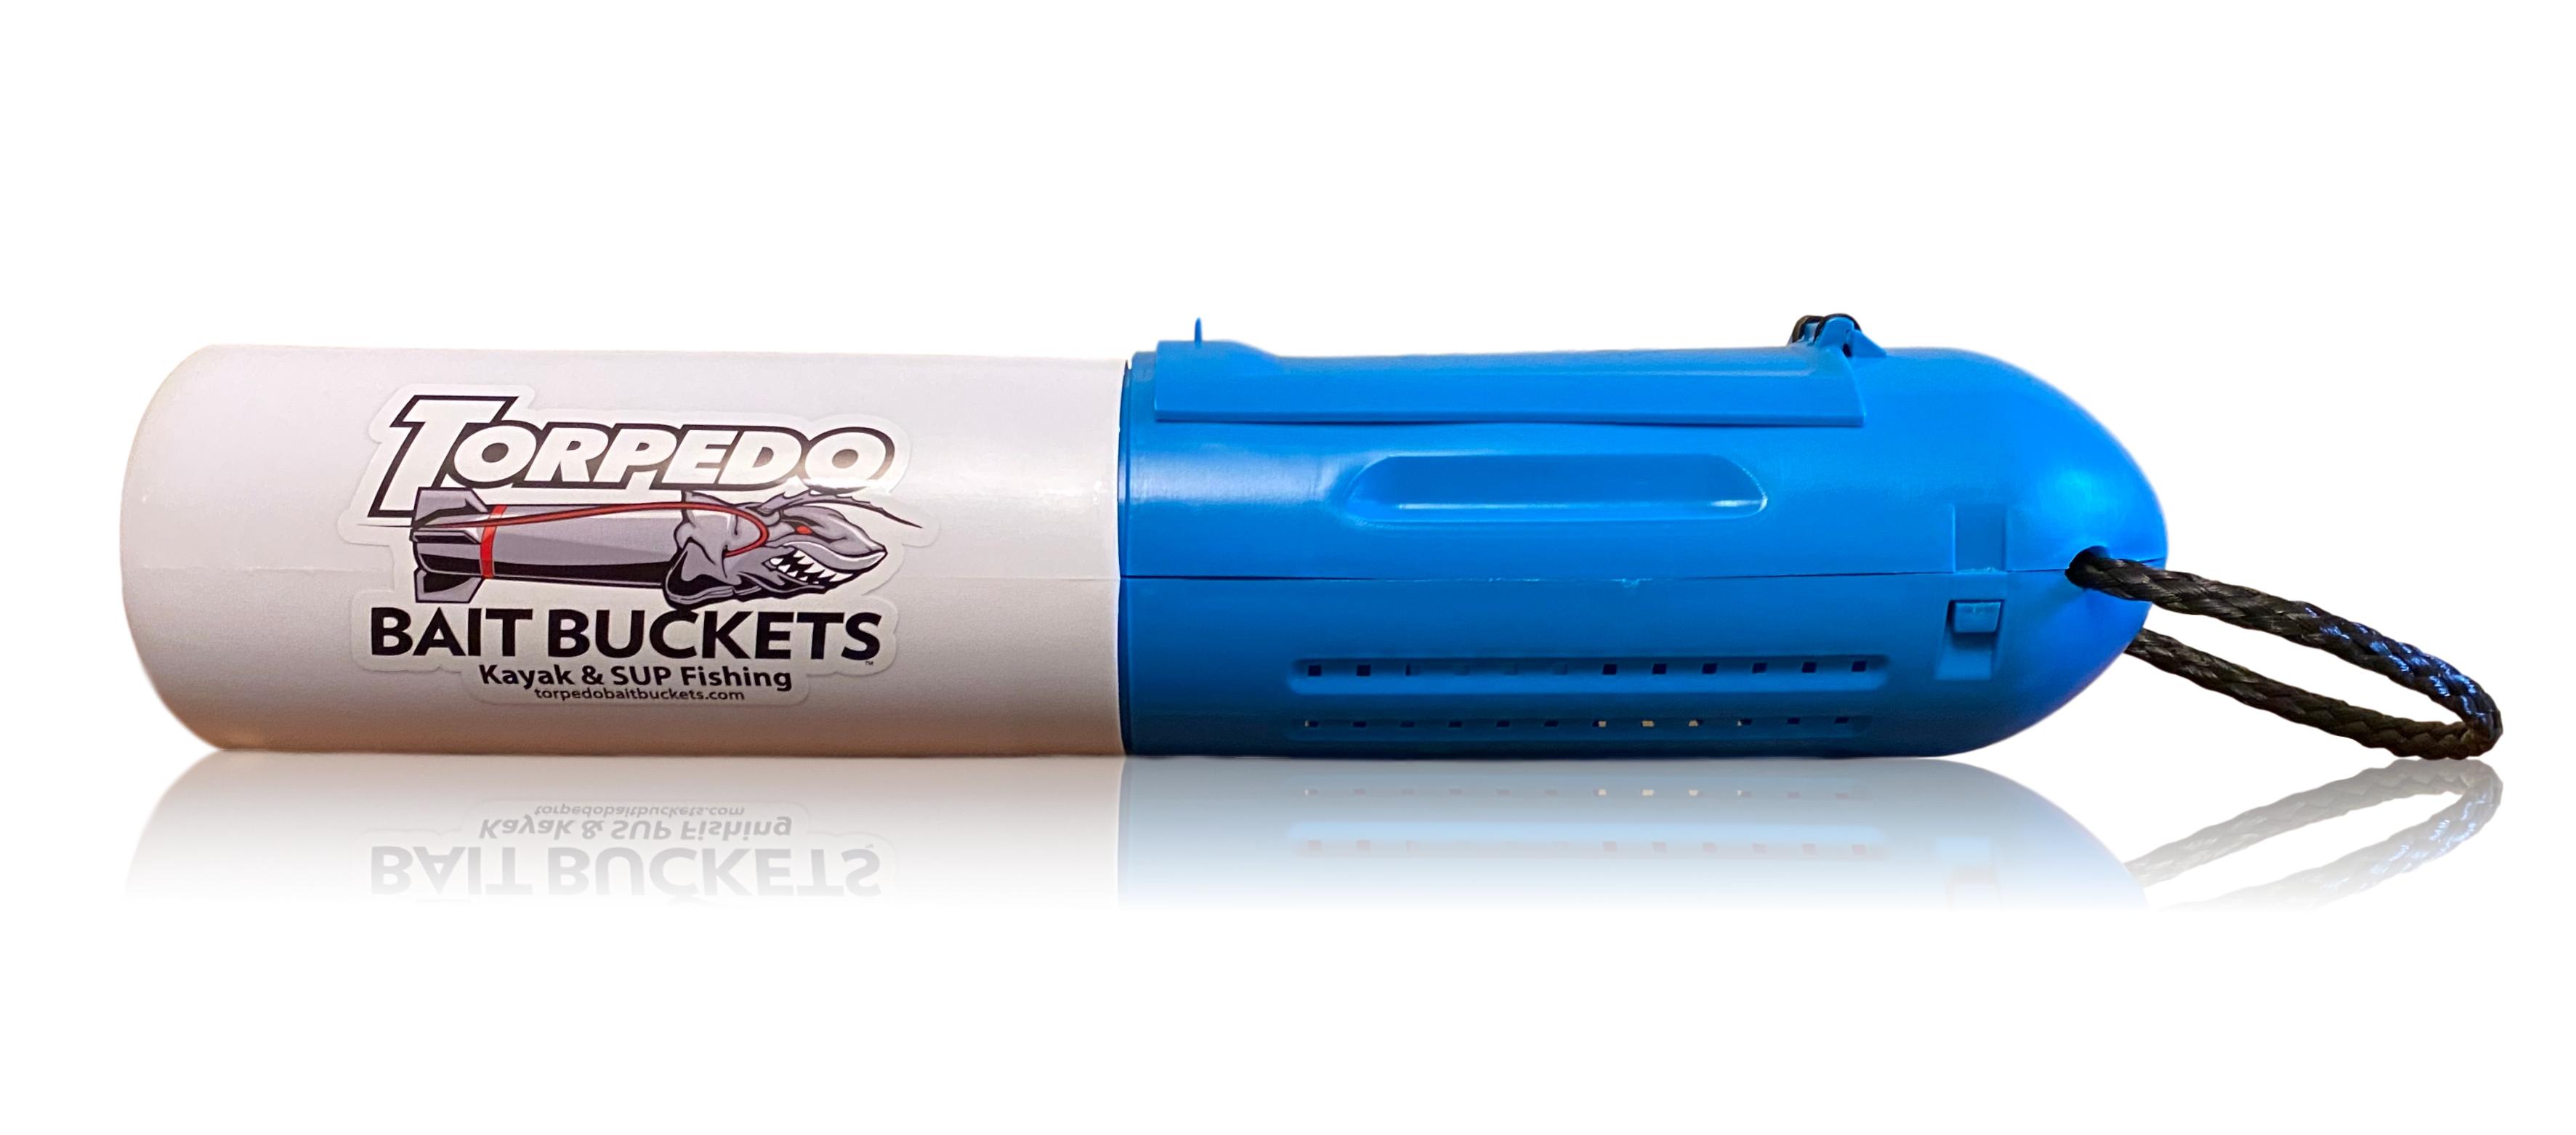 Product Description - Torpedo Bait Buckets